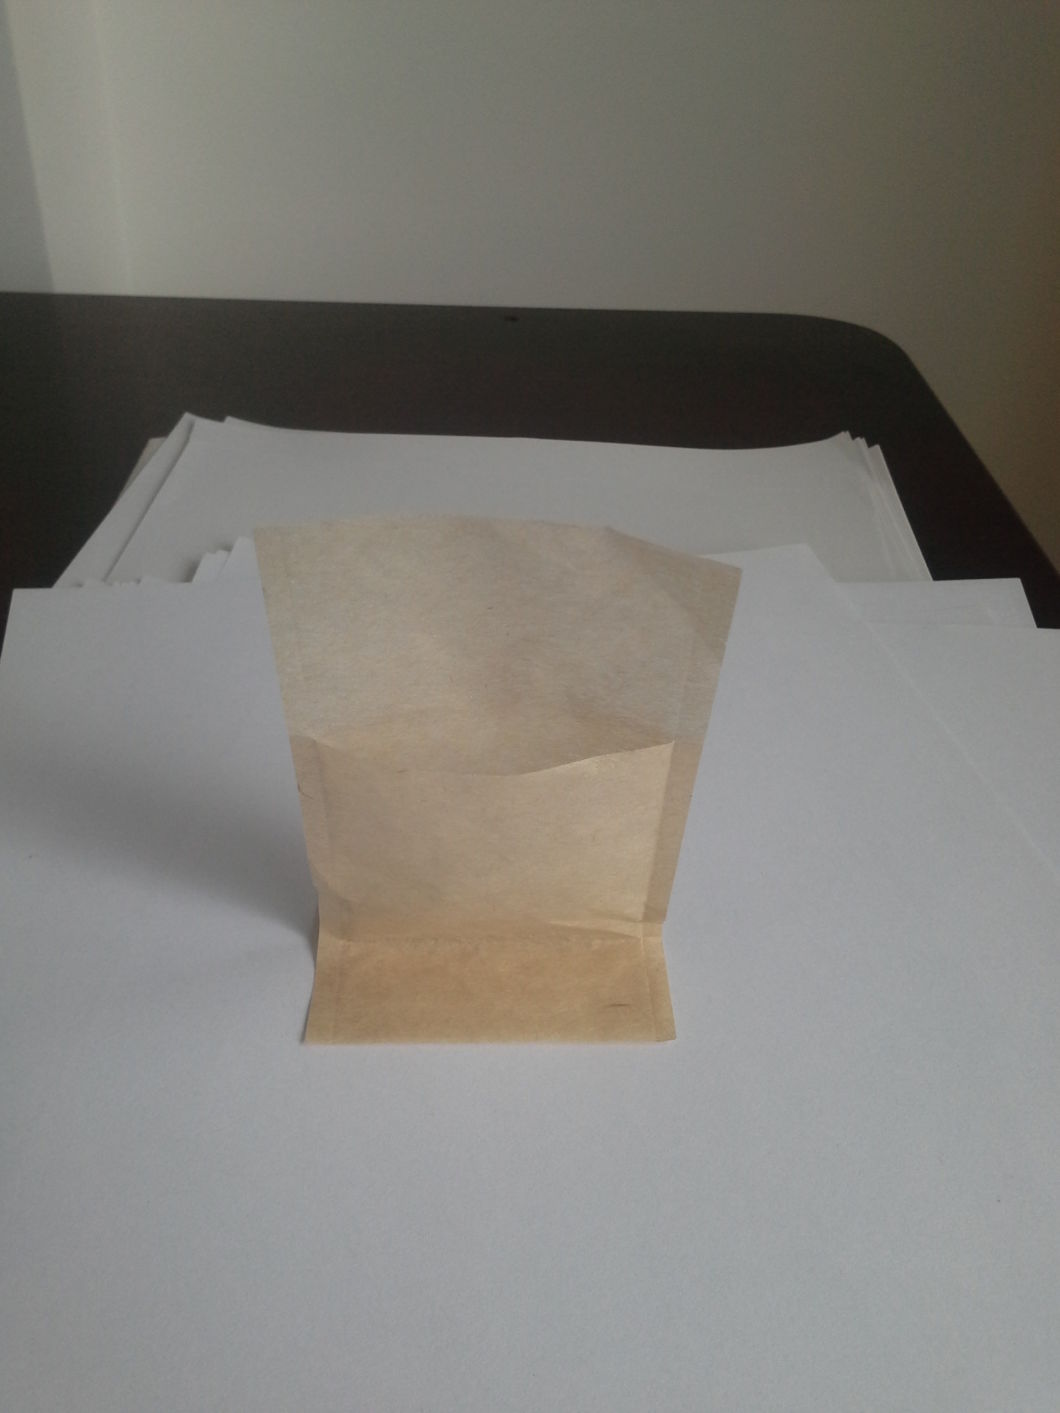 Non Woven Filter Paper Bag Making Machine for Tea /Flower Tea / Herbal Tea Coffee Food (BSIT)